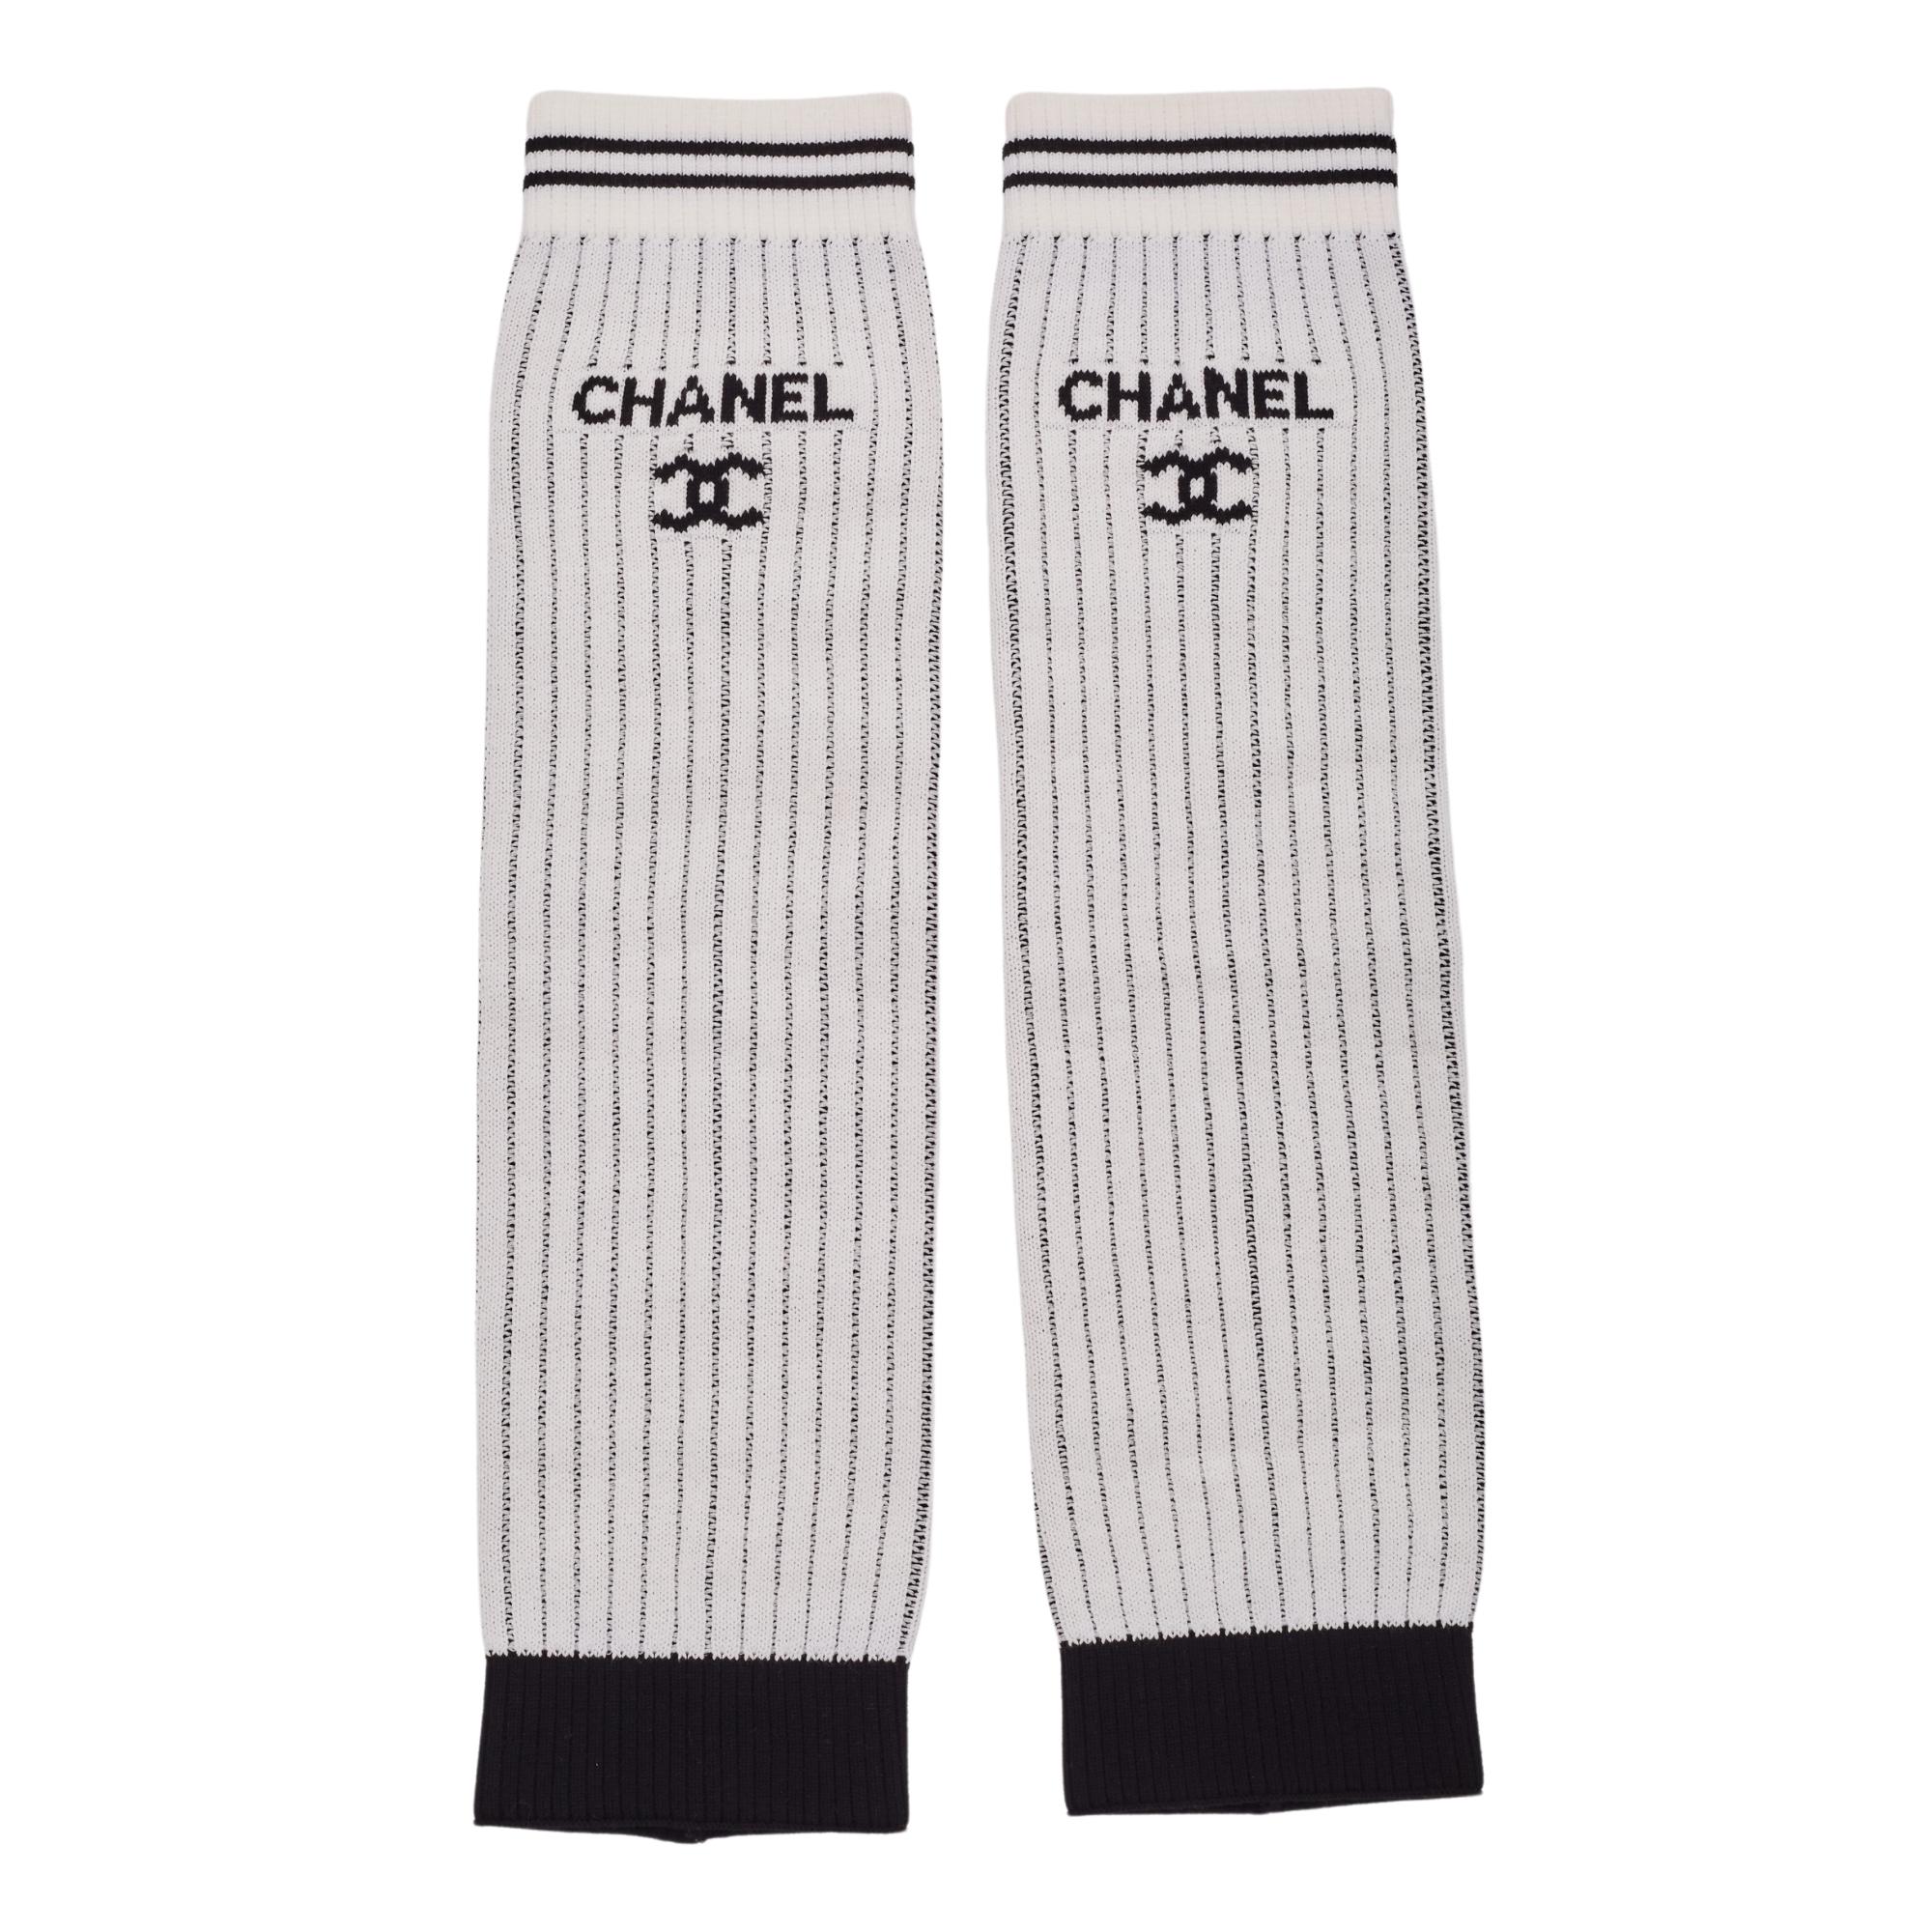 Chanel Logo White Knit Leg Warmers Gaiters